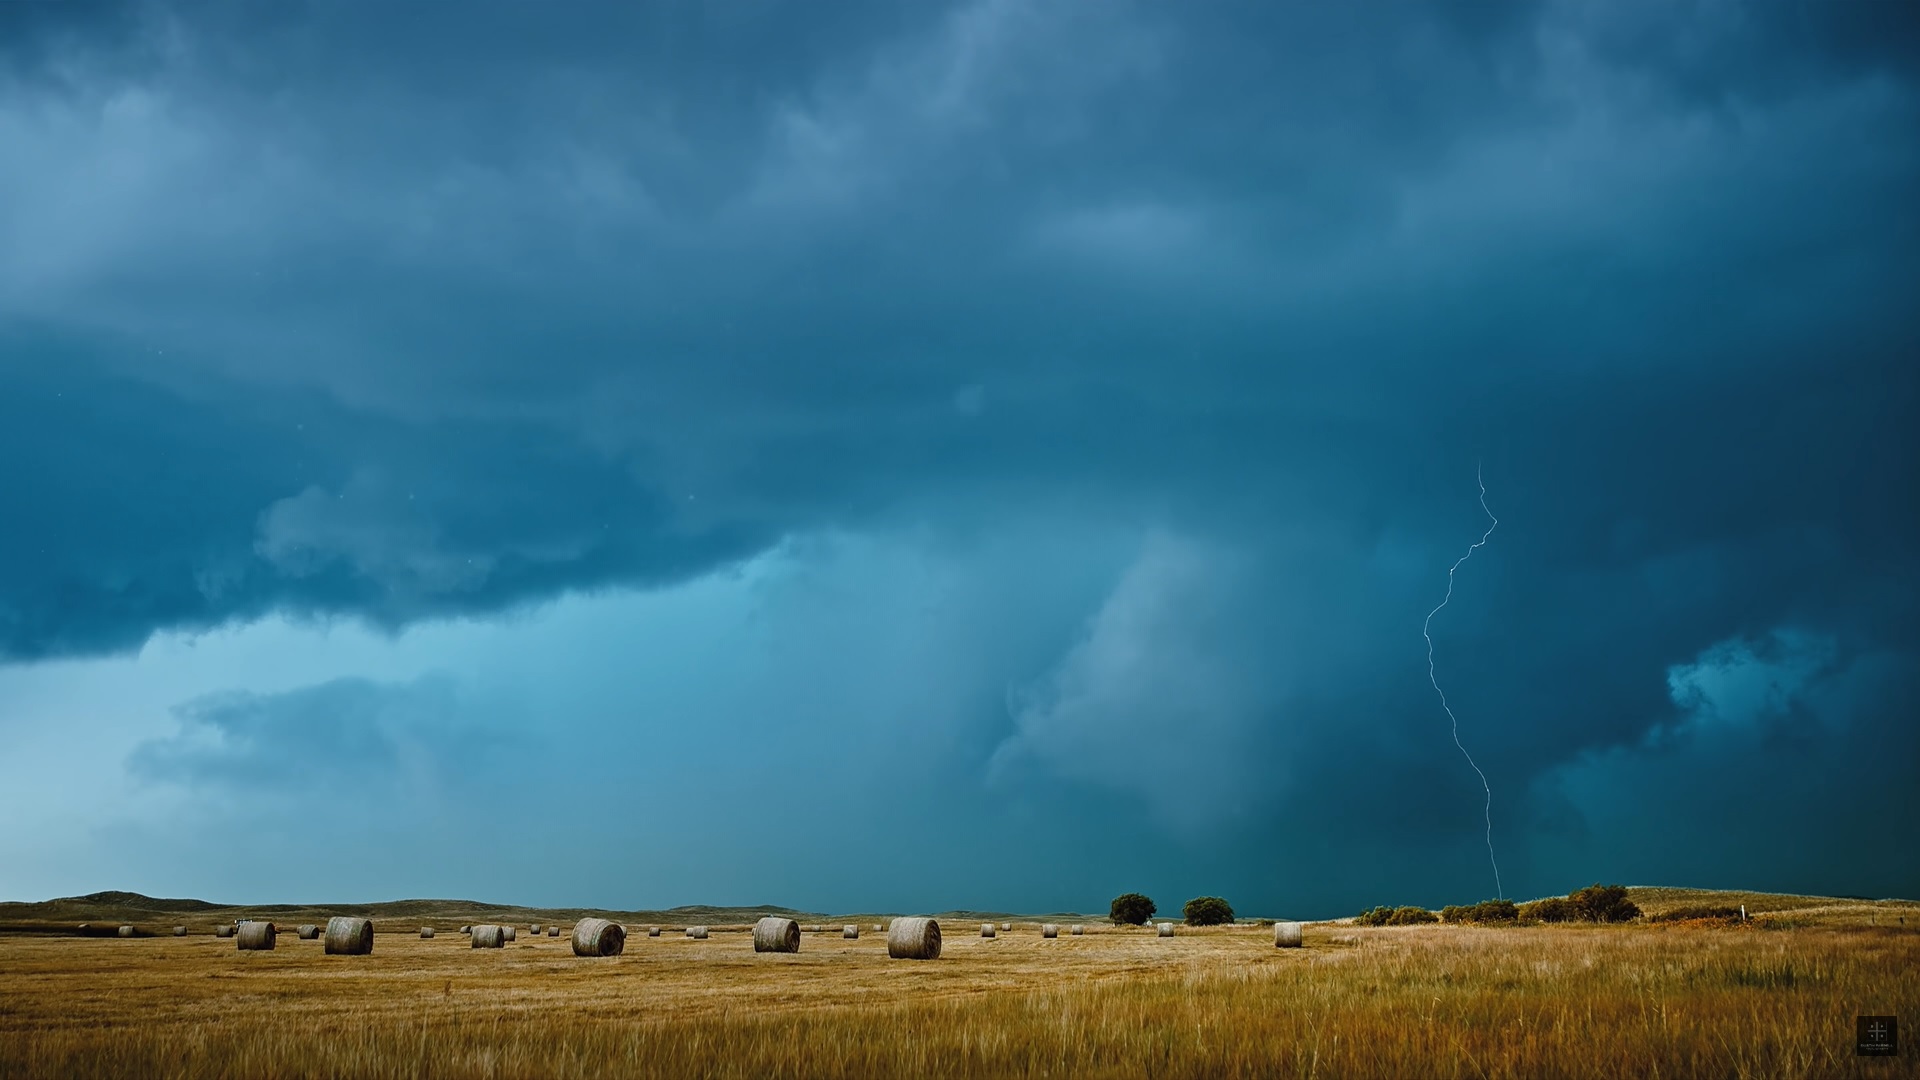 General 1920x1080 field thunderbolt sky storm haystacks clouds outdoors lightning hay bales